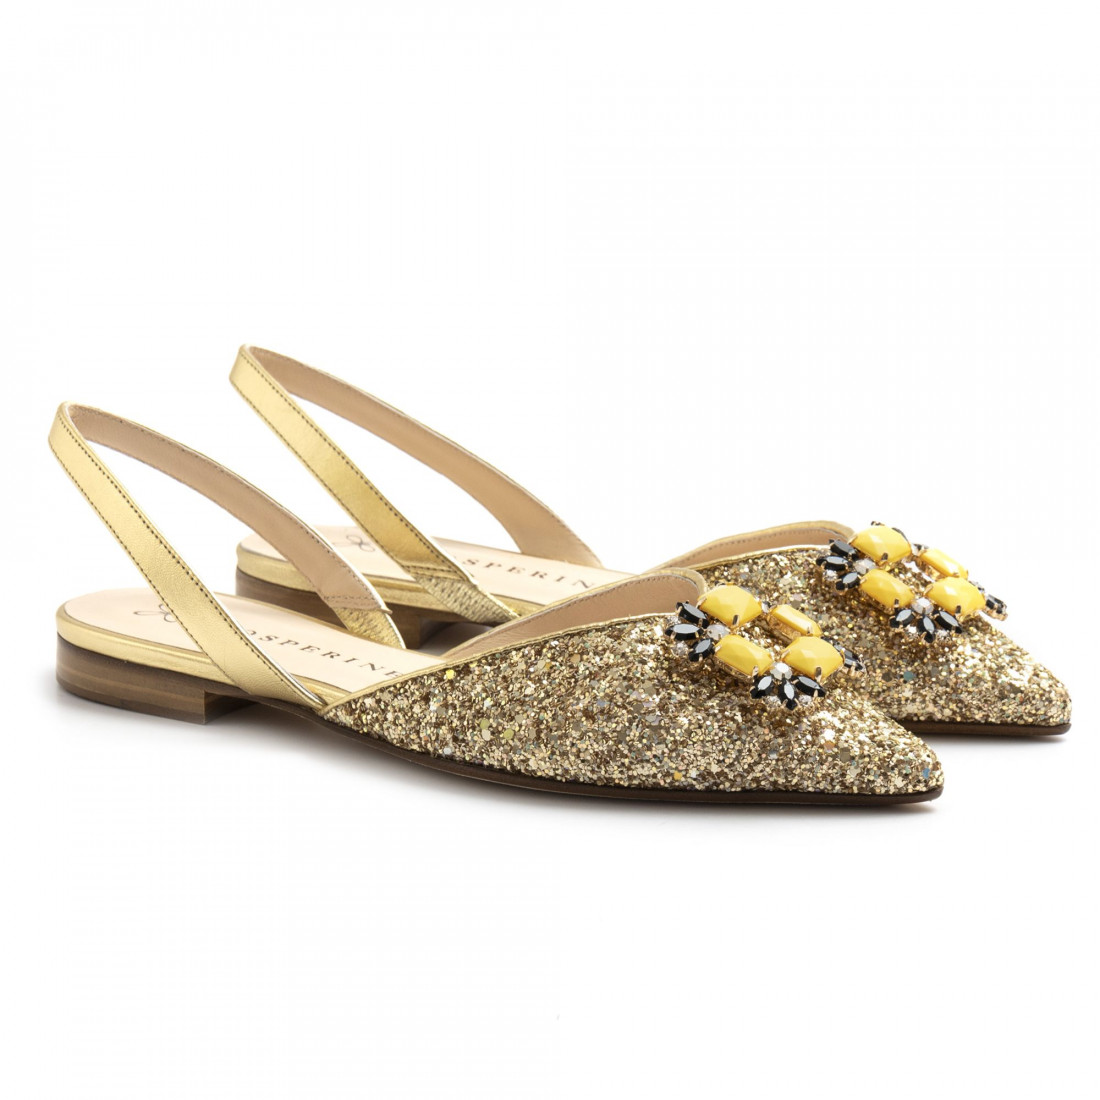 Zapato plano destalonado Prosperine en purpurina dorada con piedras amarillas